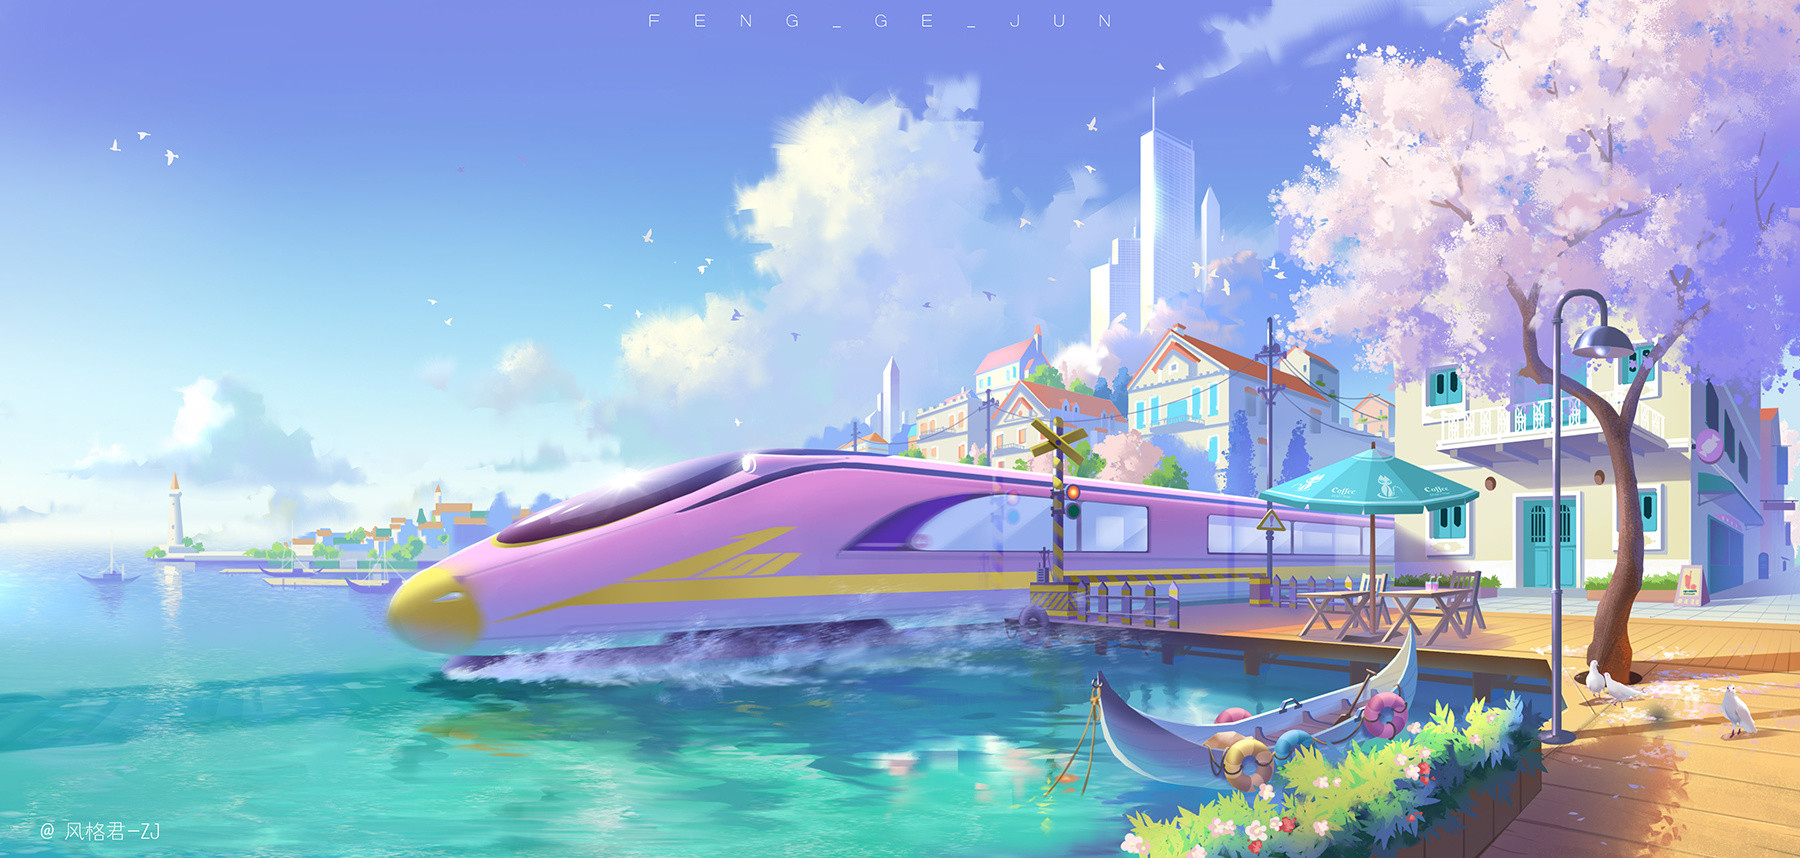 Jun Zhang Fantasy Art Digital Art Asian Architecture Landscape Train Canoe Water Lighthouse Pink Fan Wallpaper:1800x858